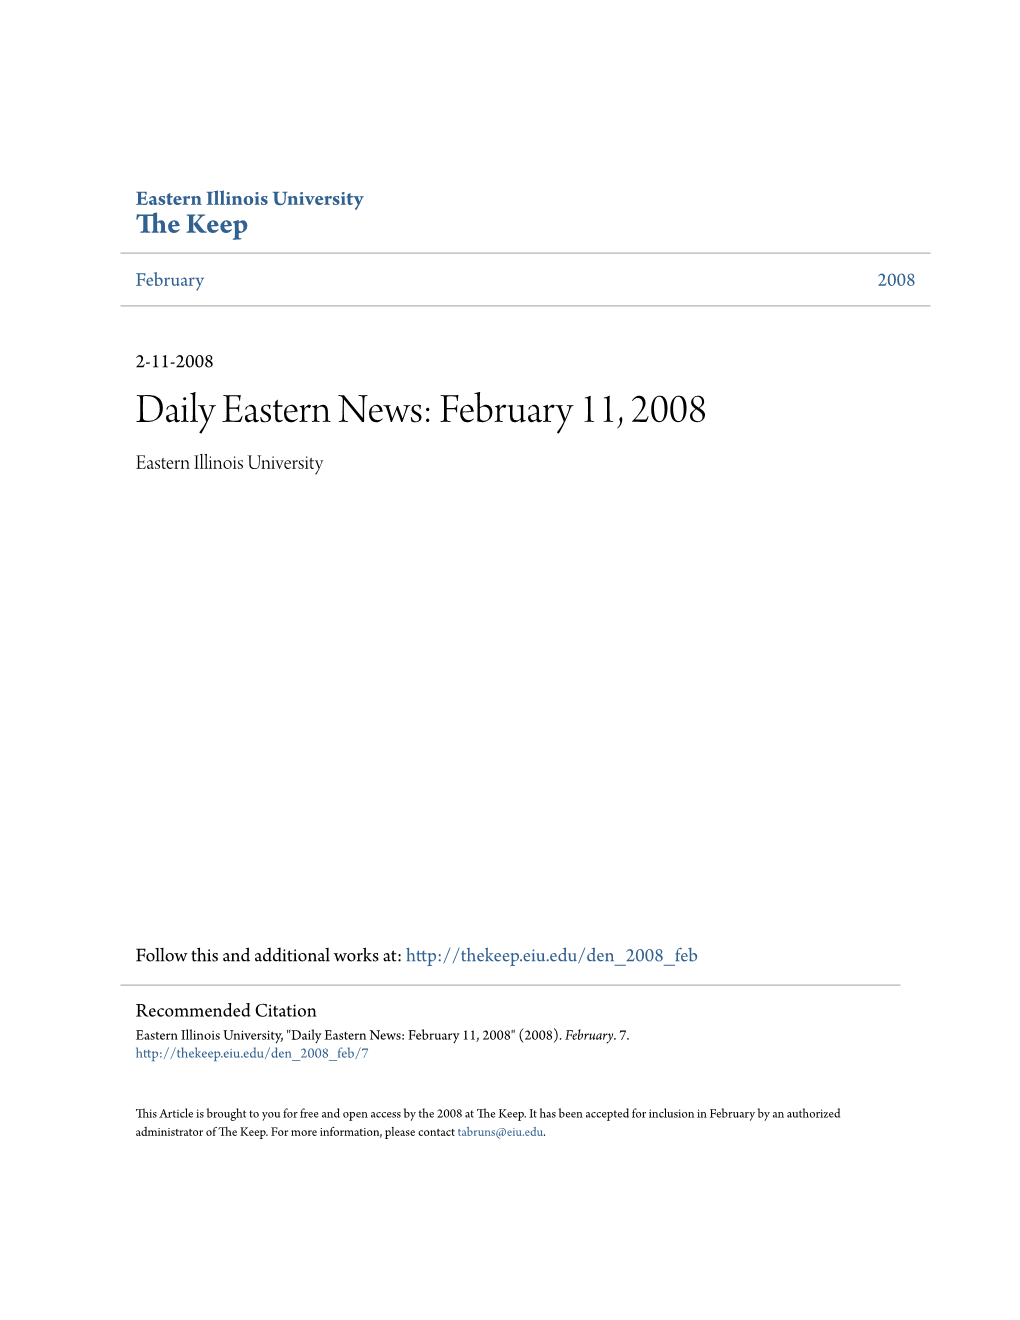 Daily Eastern News: February 11, 2008 Eastern Illinois University